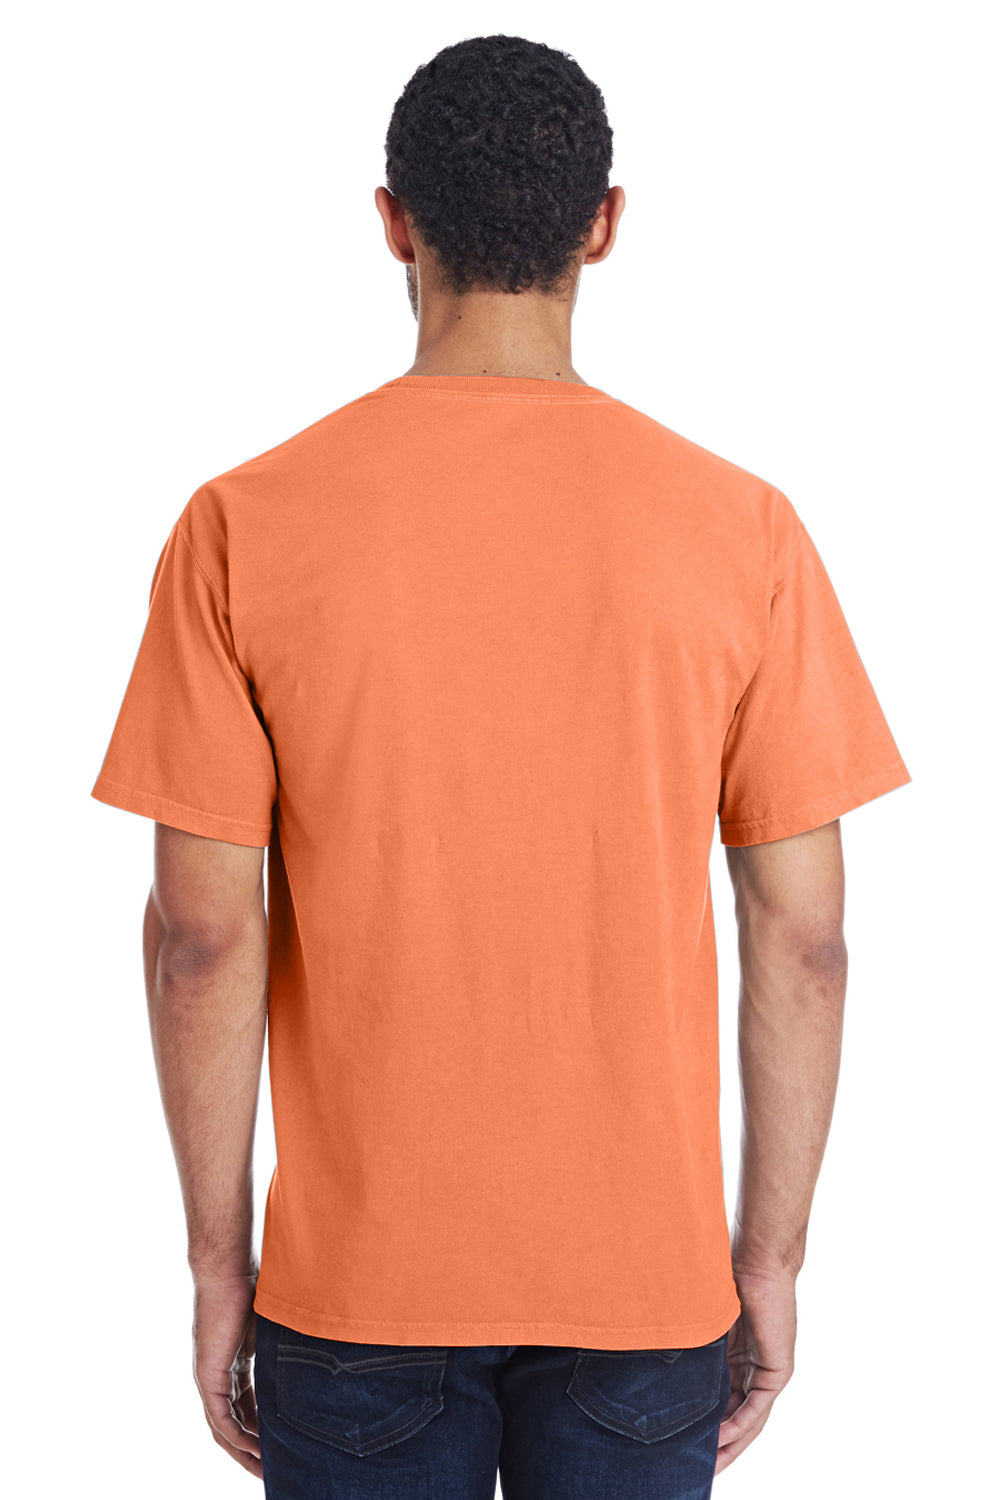 ComfortWash by Hanes GDH100 Short Sleeve Crewneck T-Shirt Horizon Orange Back